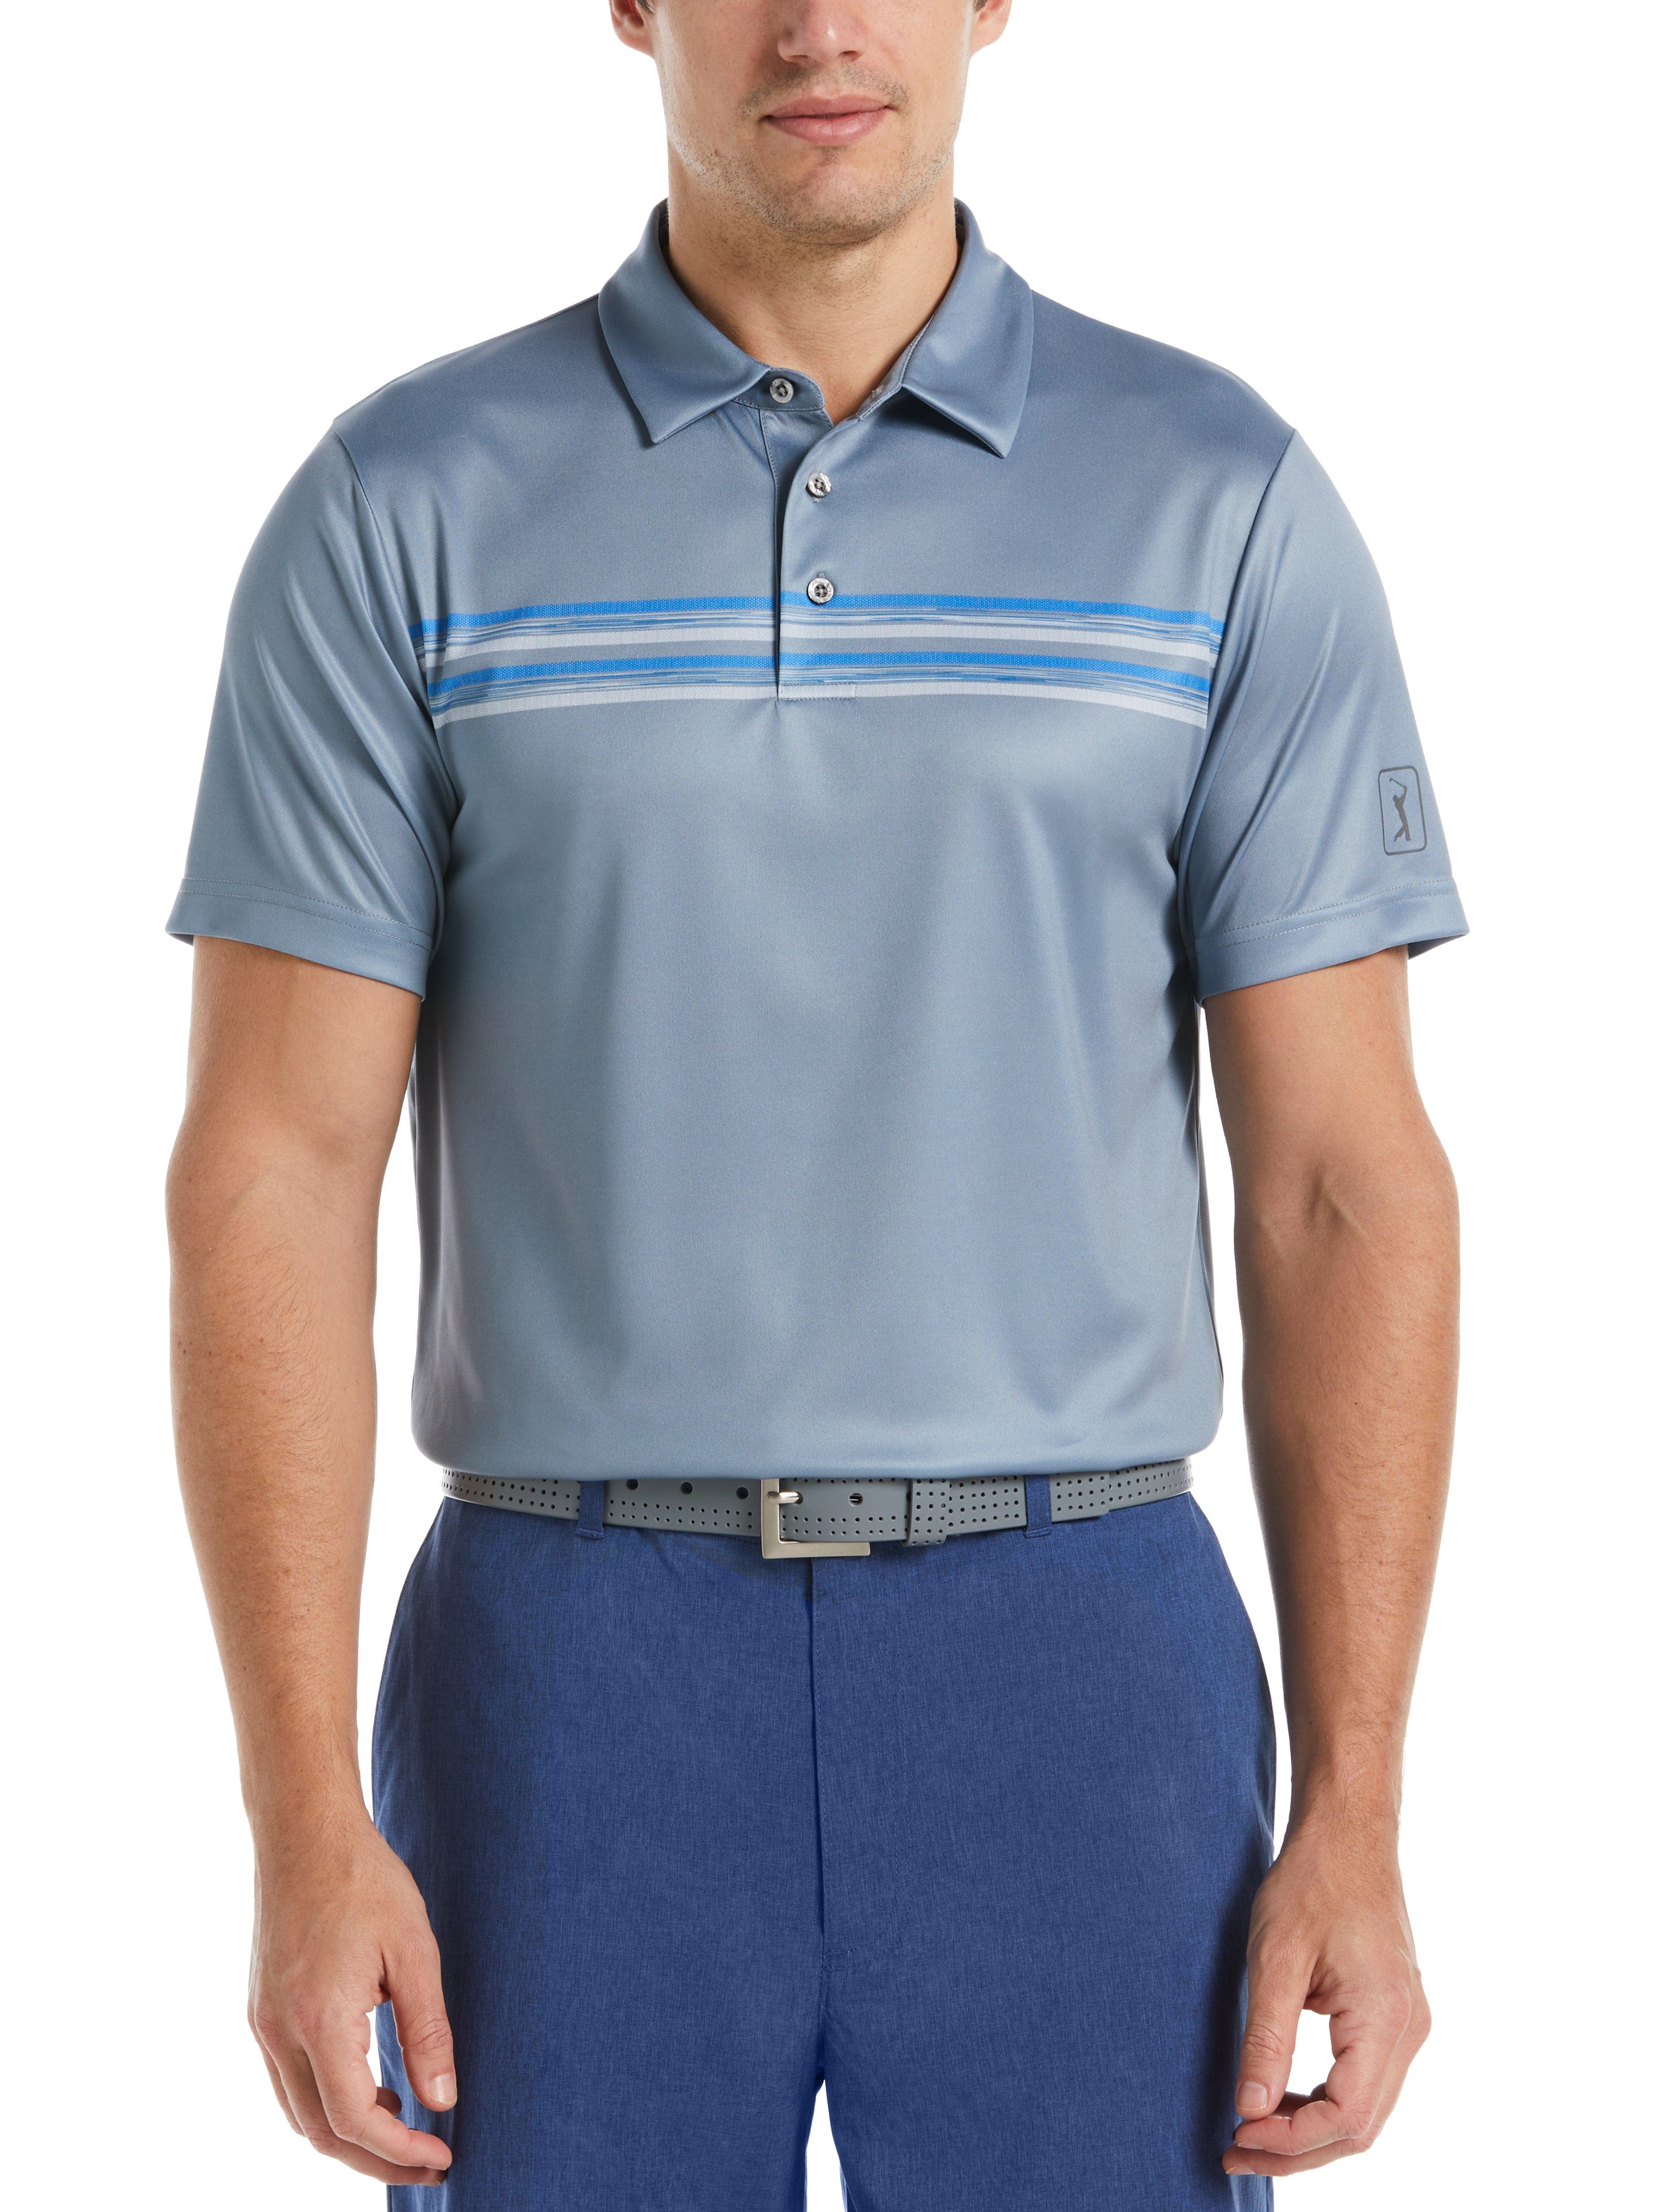 PGA TOUR Apparel Mens Chest Stripe Golf Polo Shirt, Size 3XL, Tradewinds Gray, 100% Polyester | Golf Apparel Shop